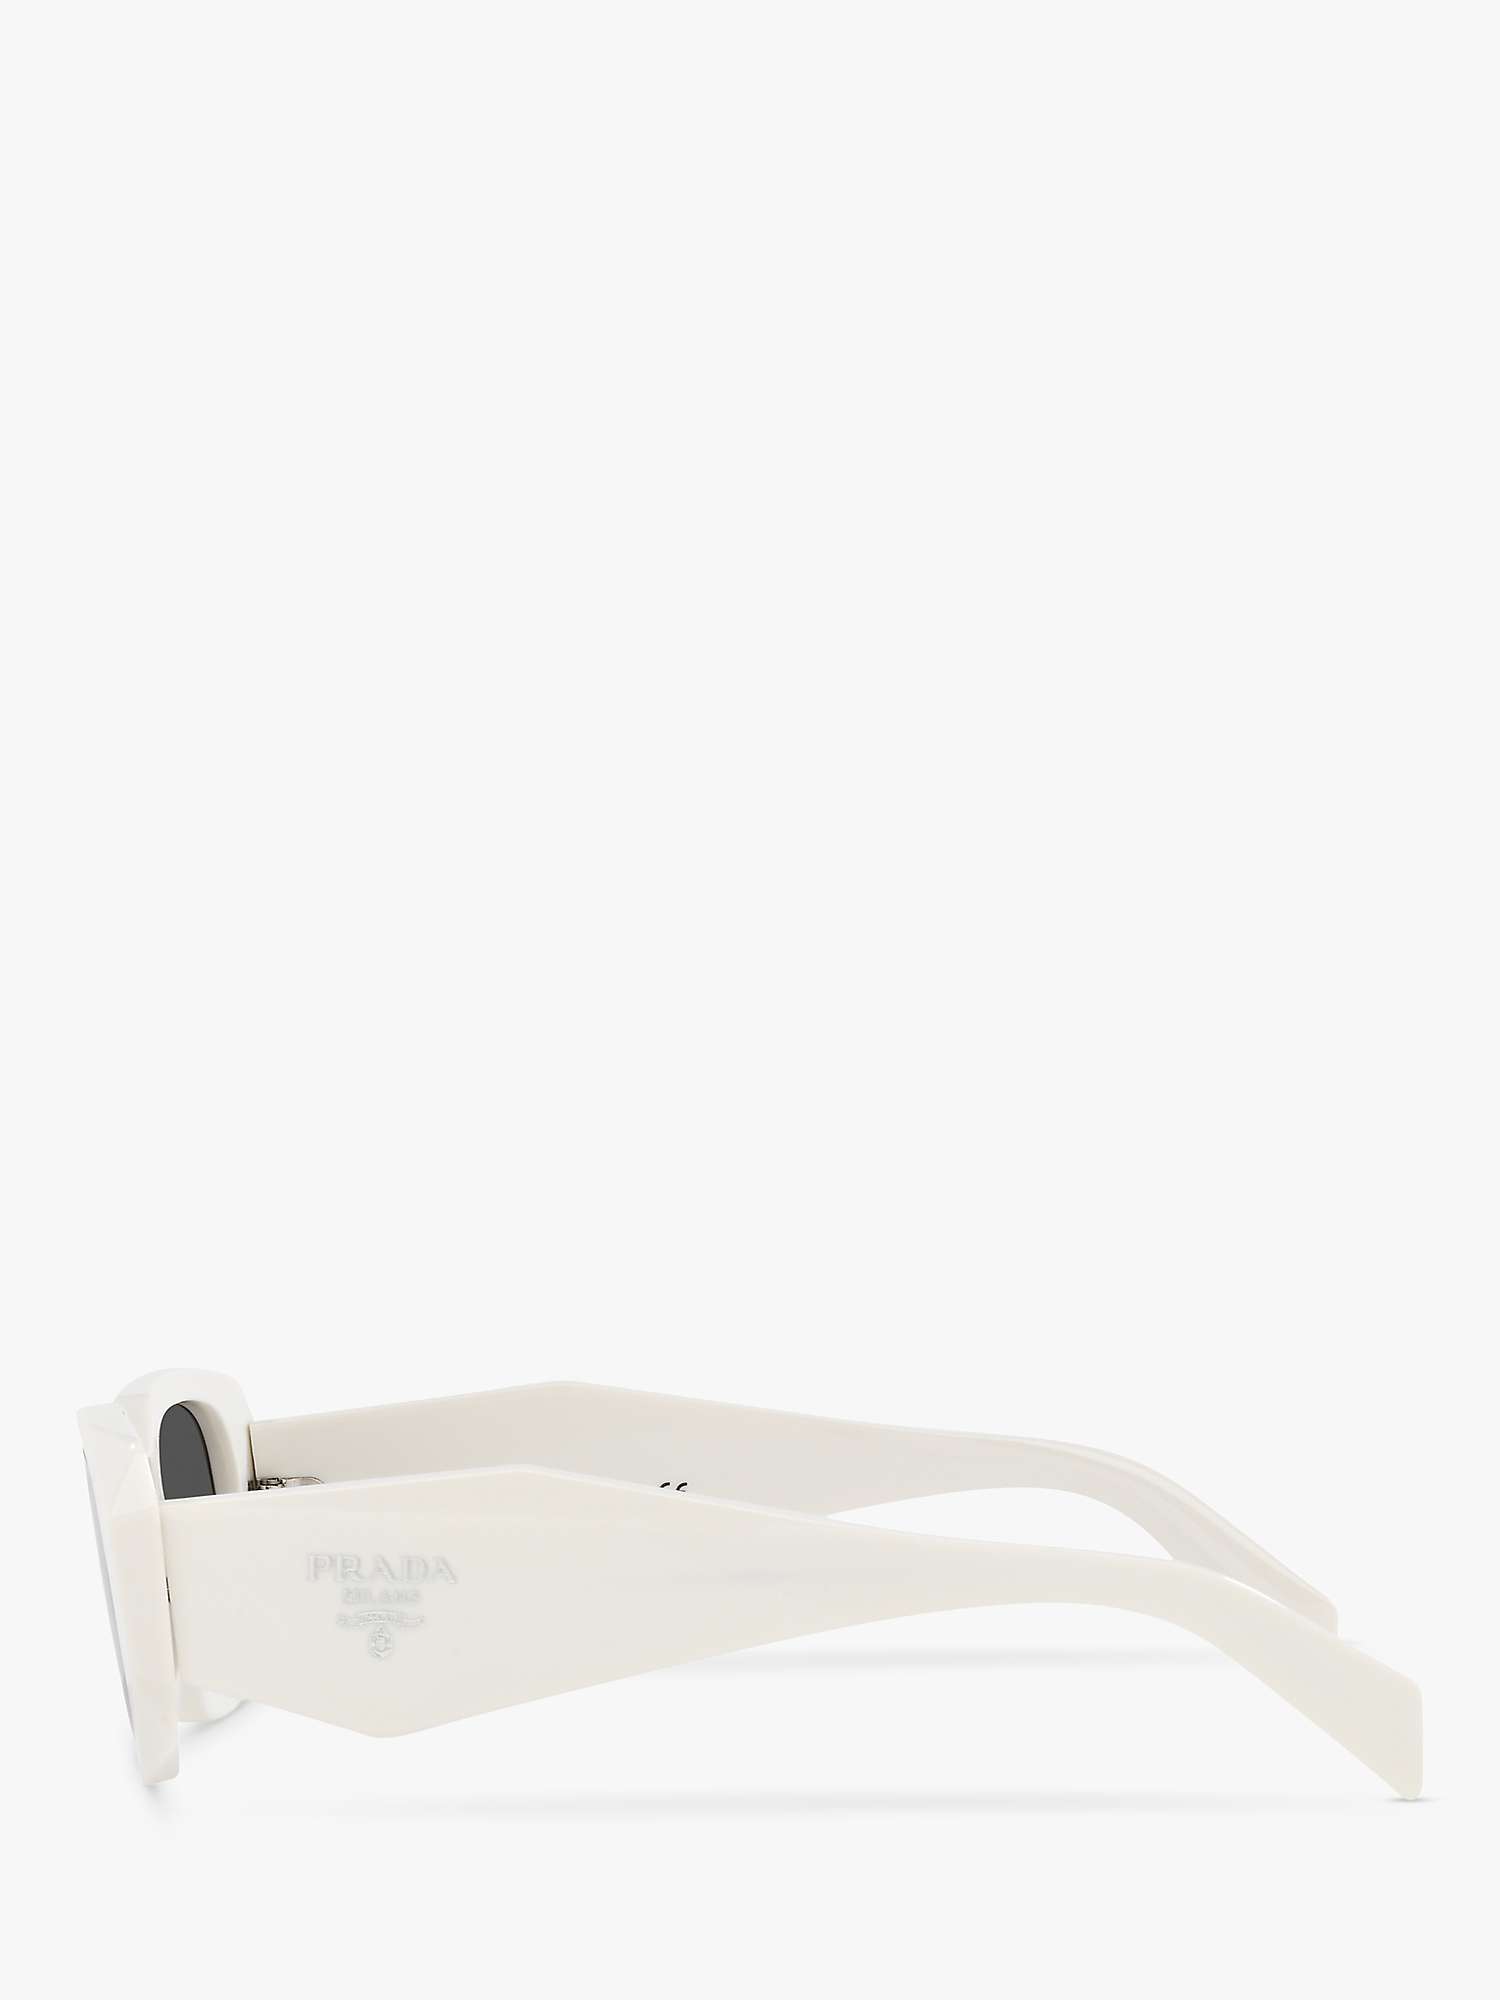 Buy Prada PR17WS Women's Rectangular Sunglasses, White/Black Online at johnlewis.com